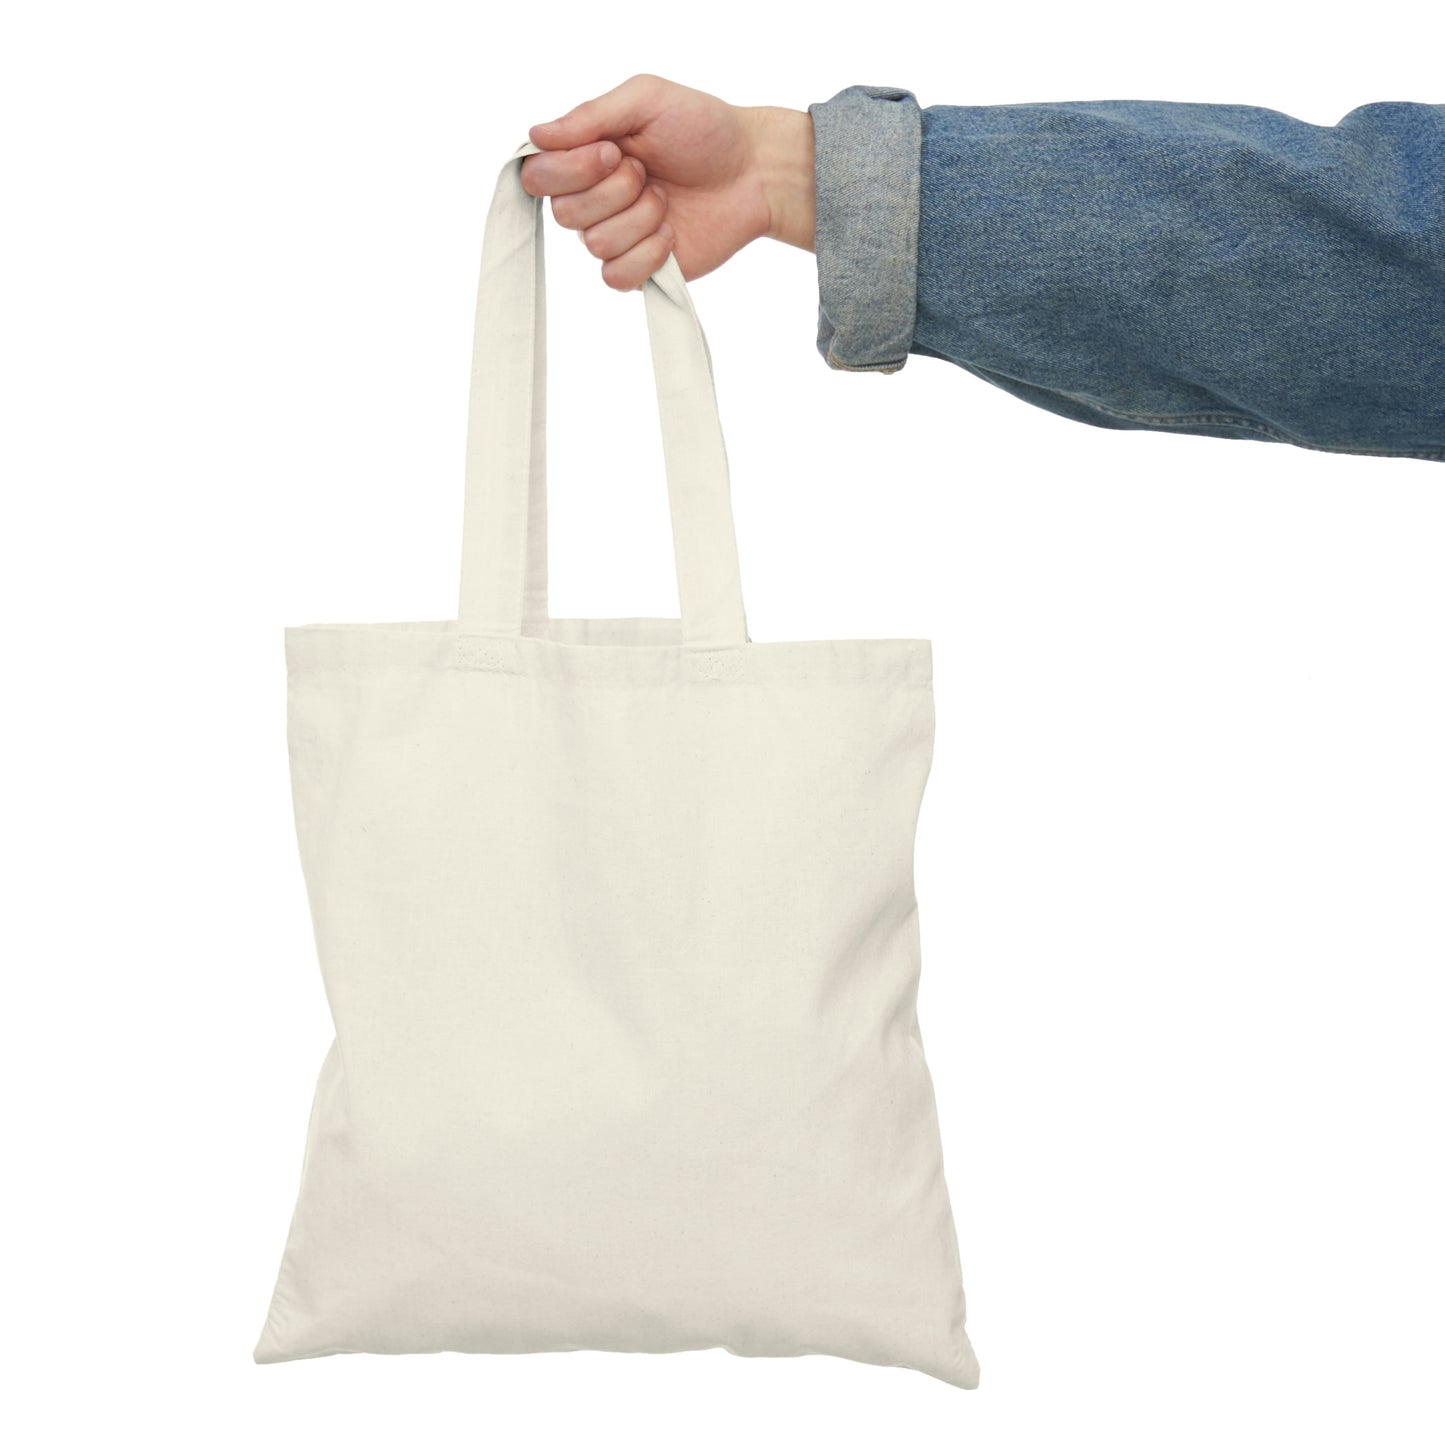 Sullivan's Secret - Natural Tote Bag